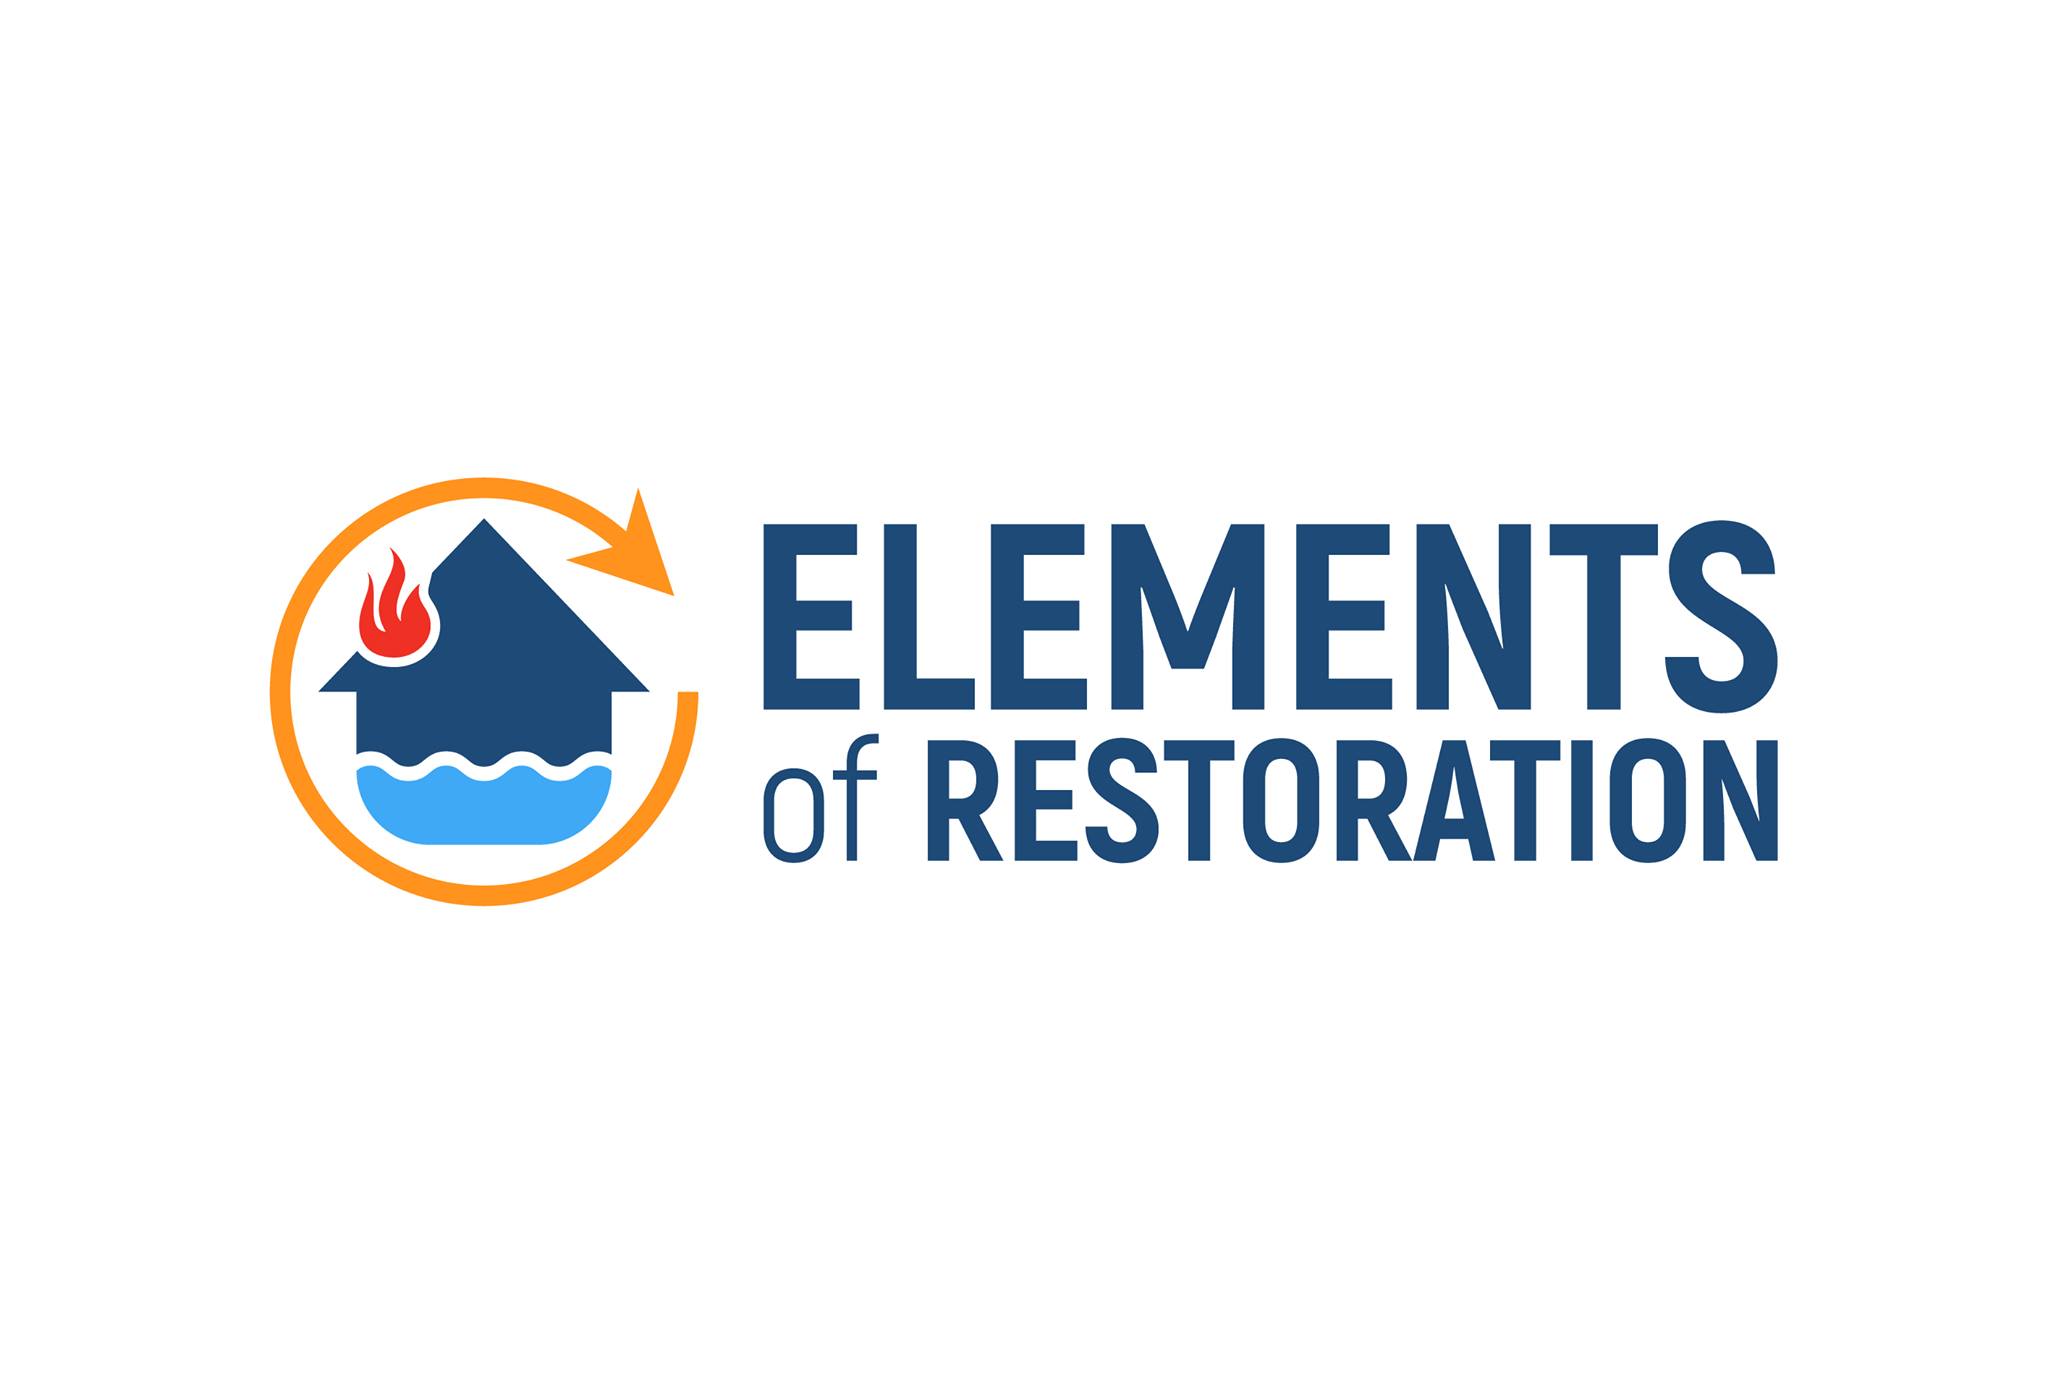 Elements of Restoration